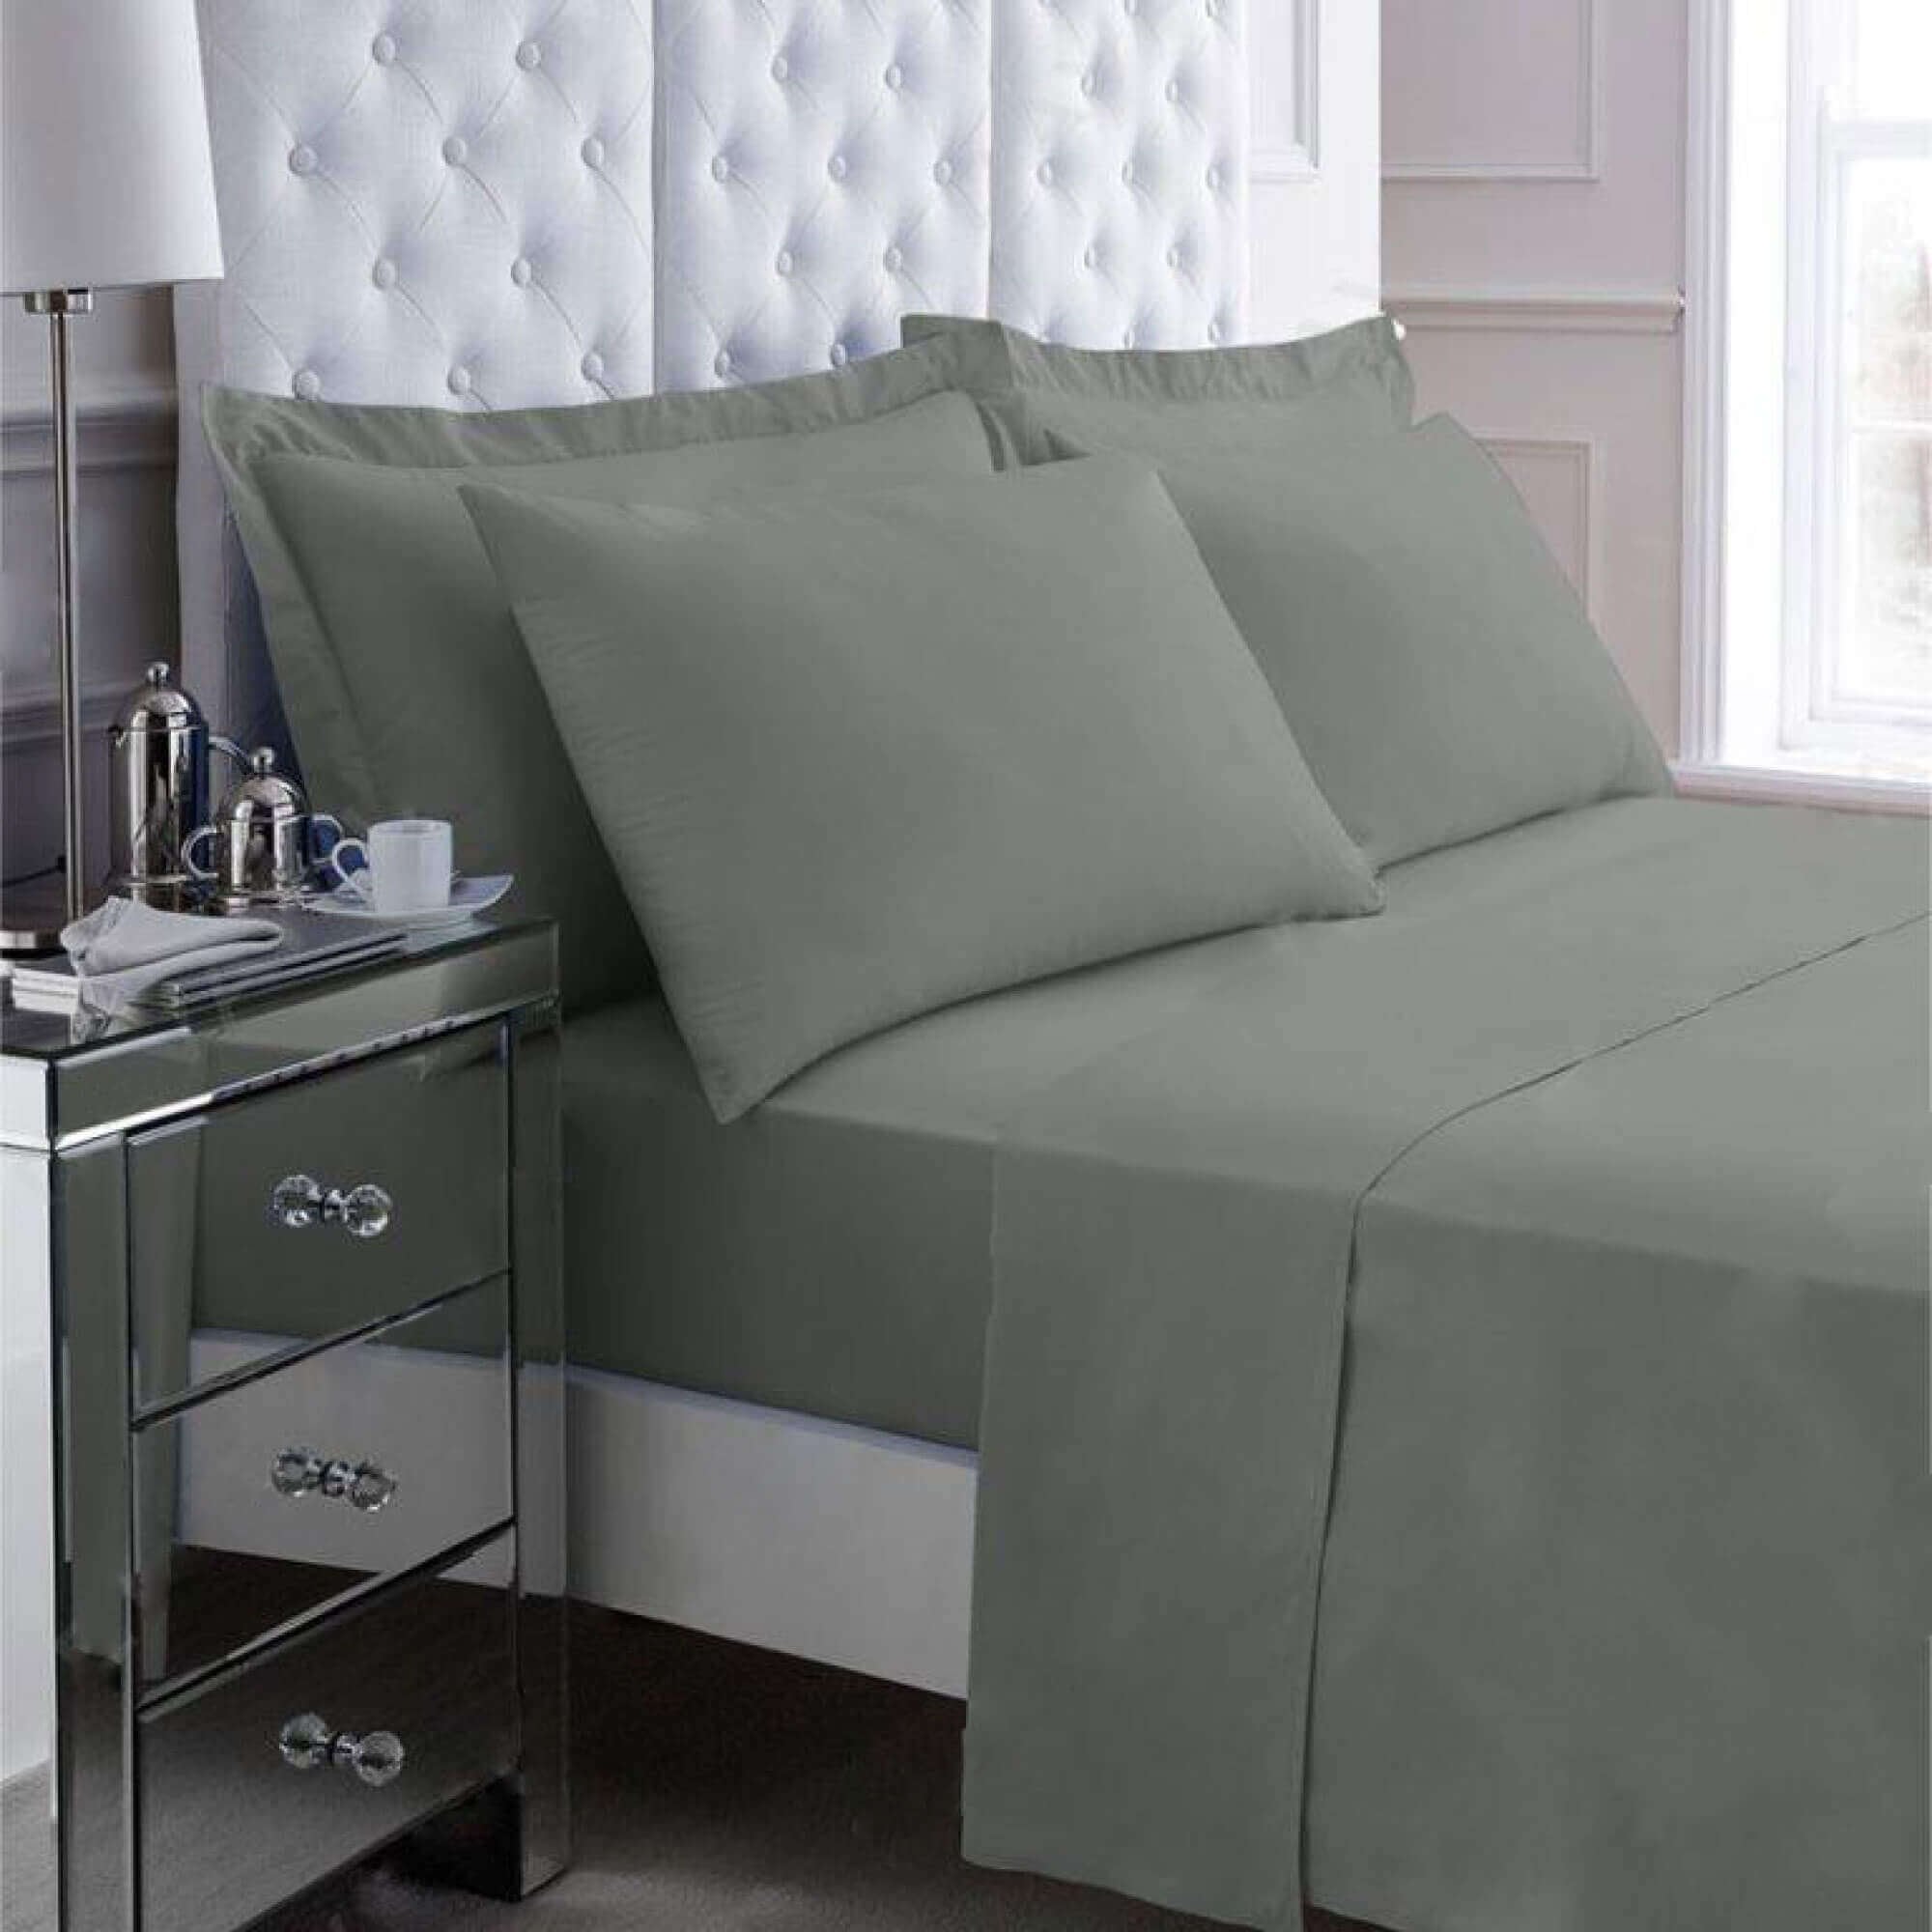 Non Iron Percale Bedding Sheet Range - Charcoal - Housewife Pillowcase Pair - TJ Hughes